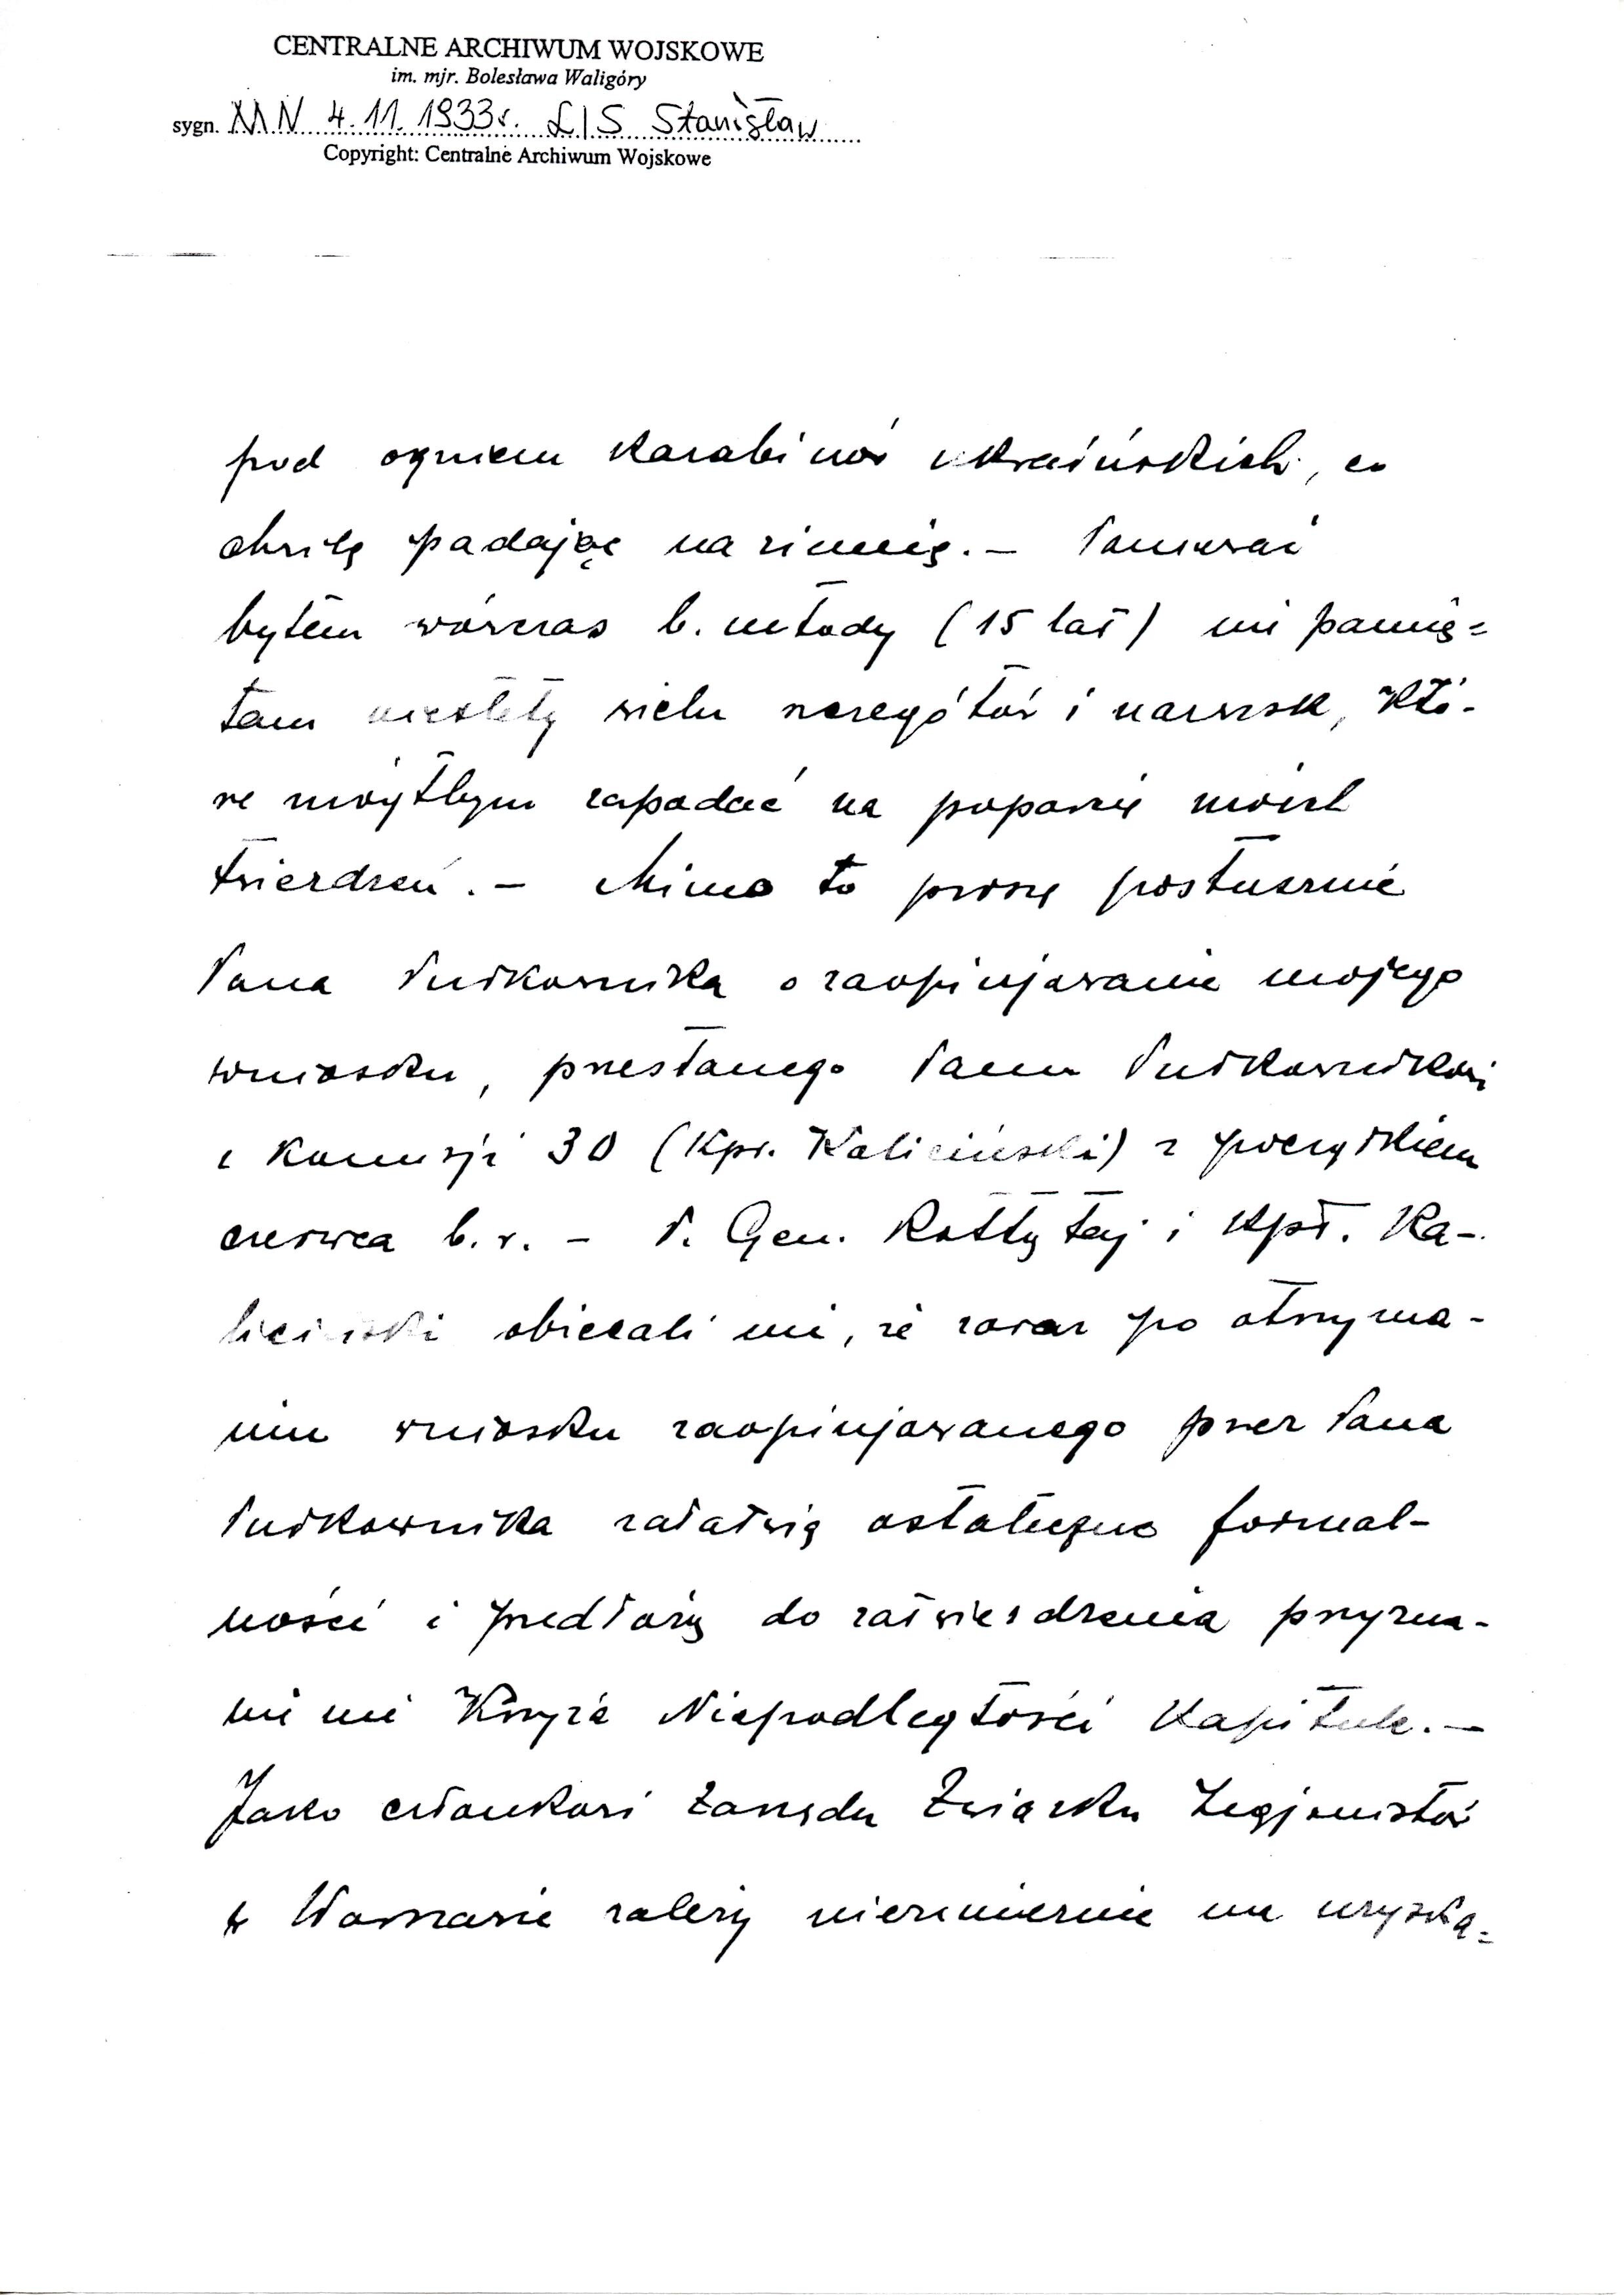 Stanislaw Lis Handwritten letter 1937 page 2.jpg